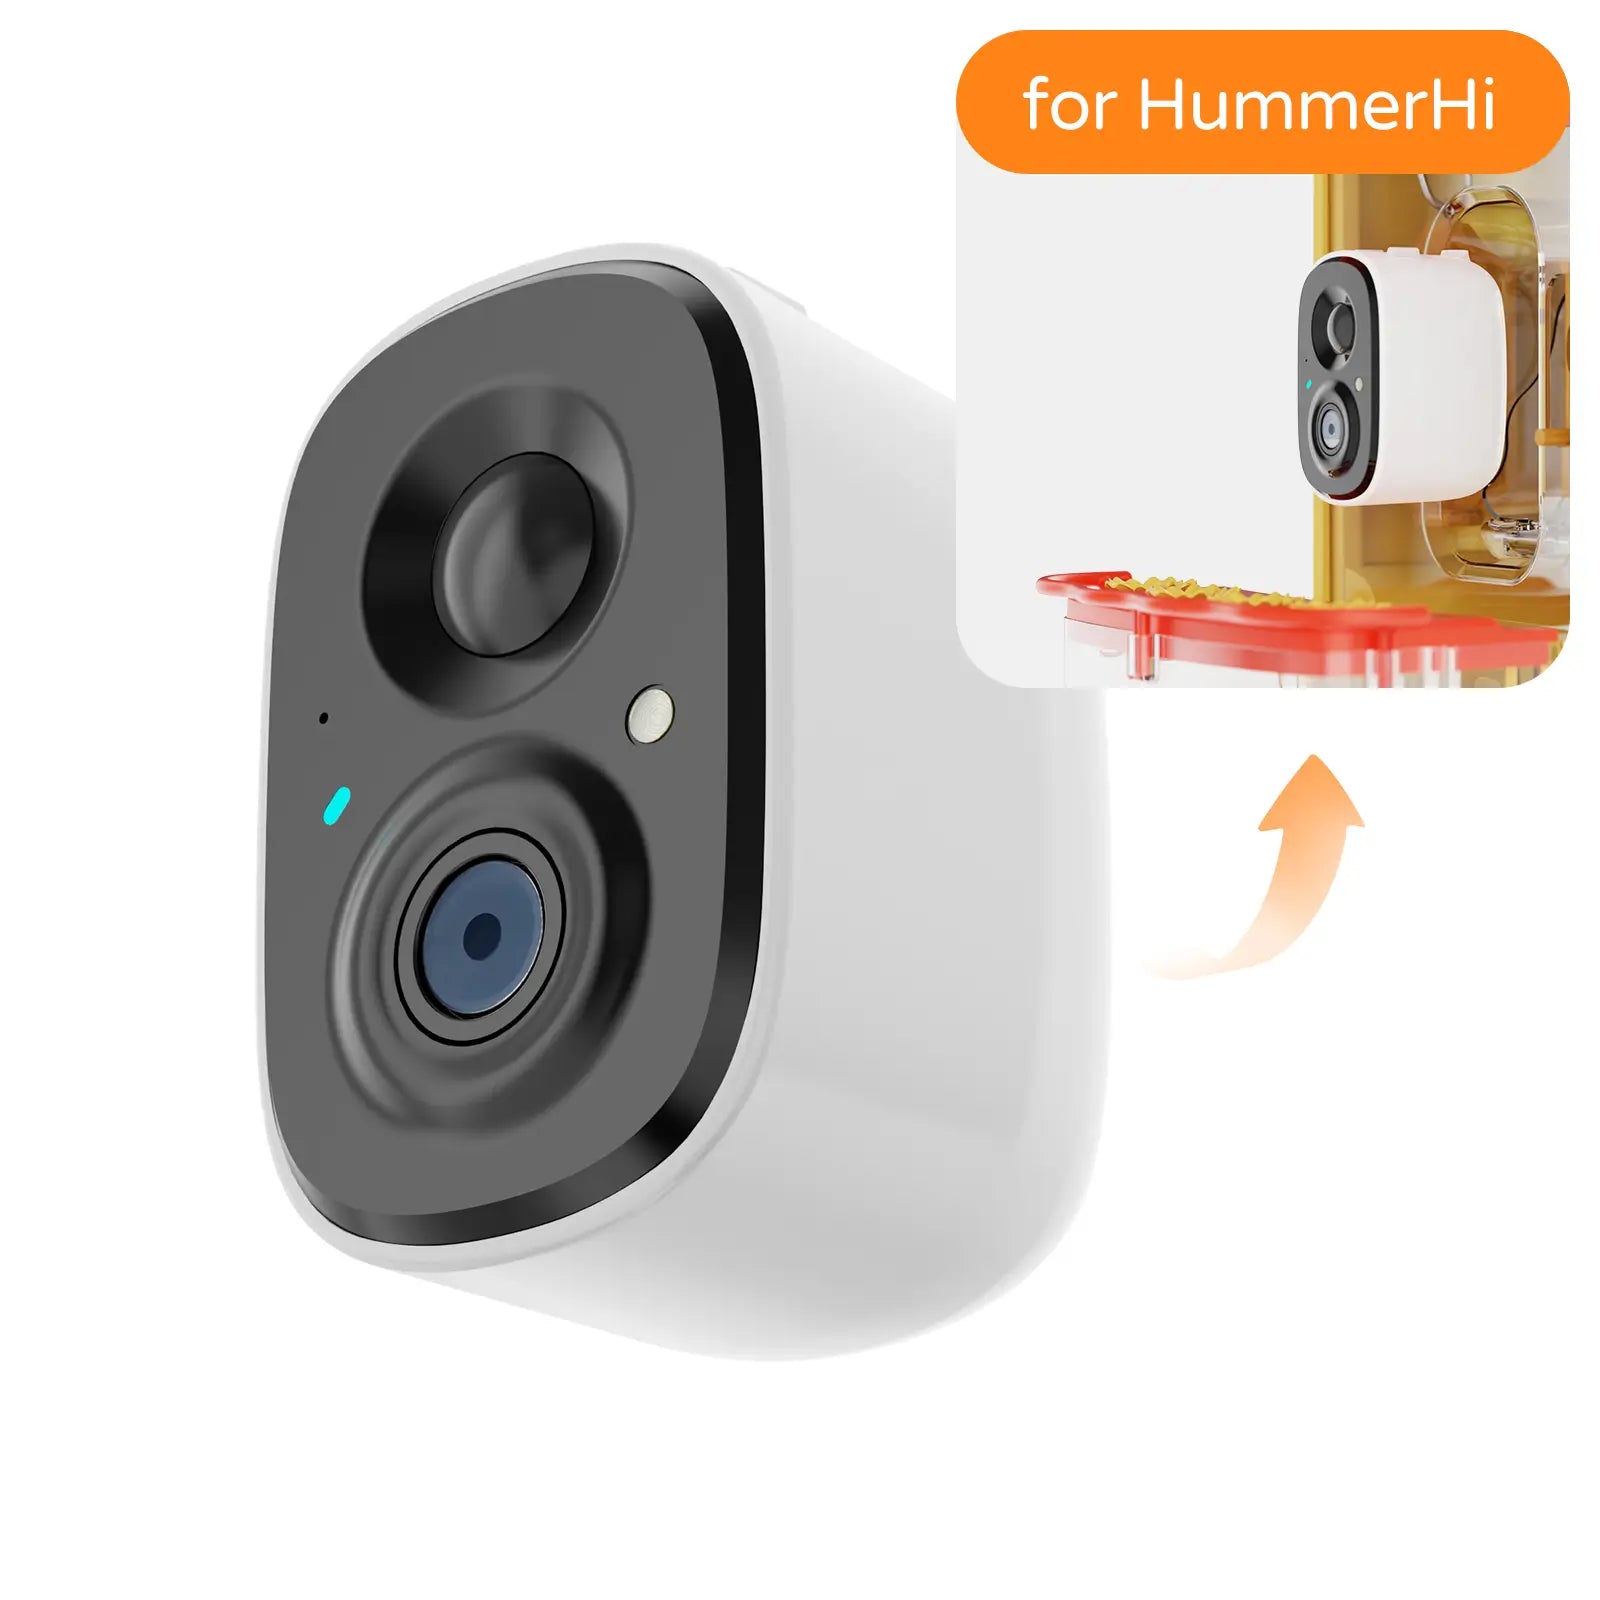 Bilantan bird feeder camera, Smart AI Bird Recognition Camera for HummerHi